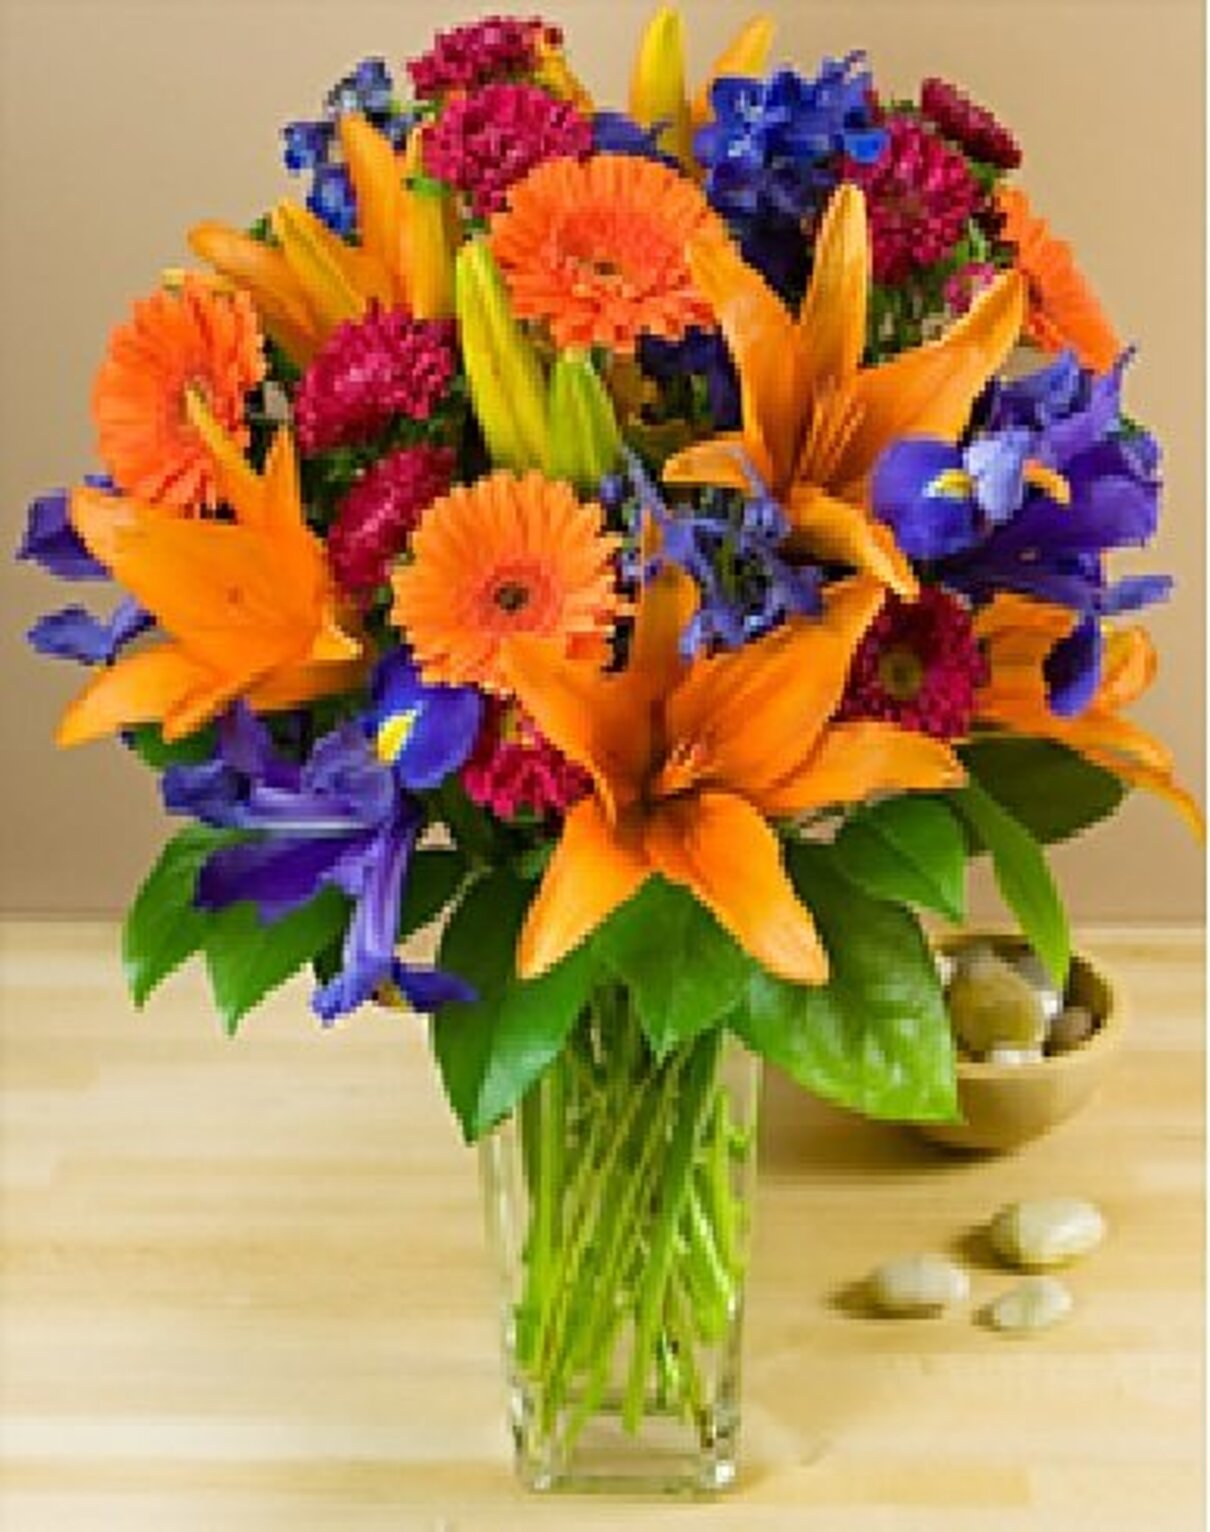 Complaint-review: 24Sendflowers.com - Delivers random flowers instead of chosen from the site arrangements